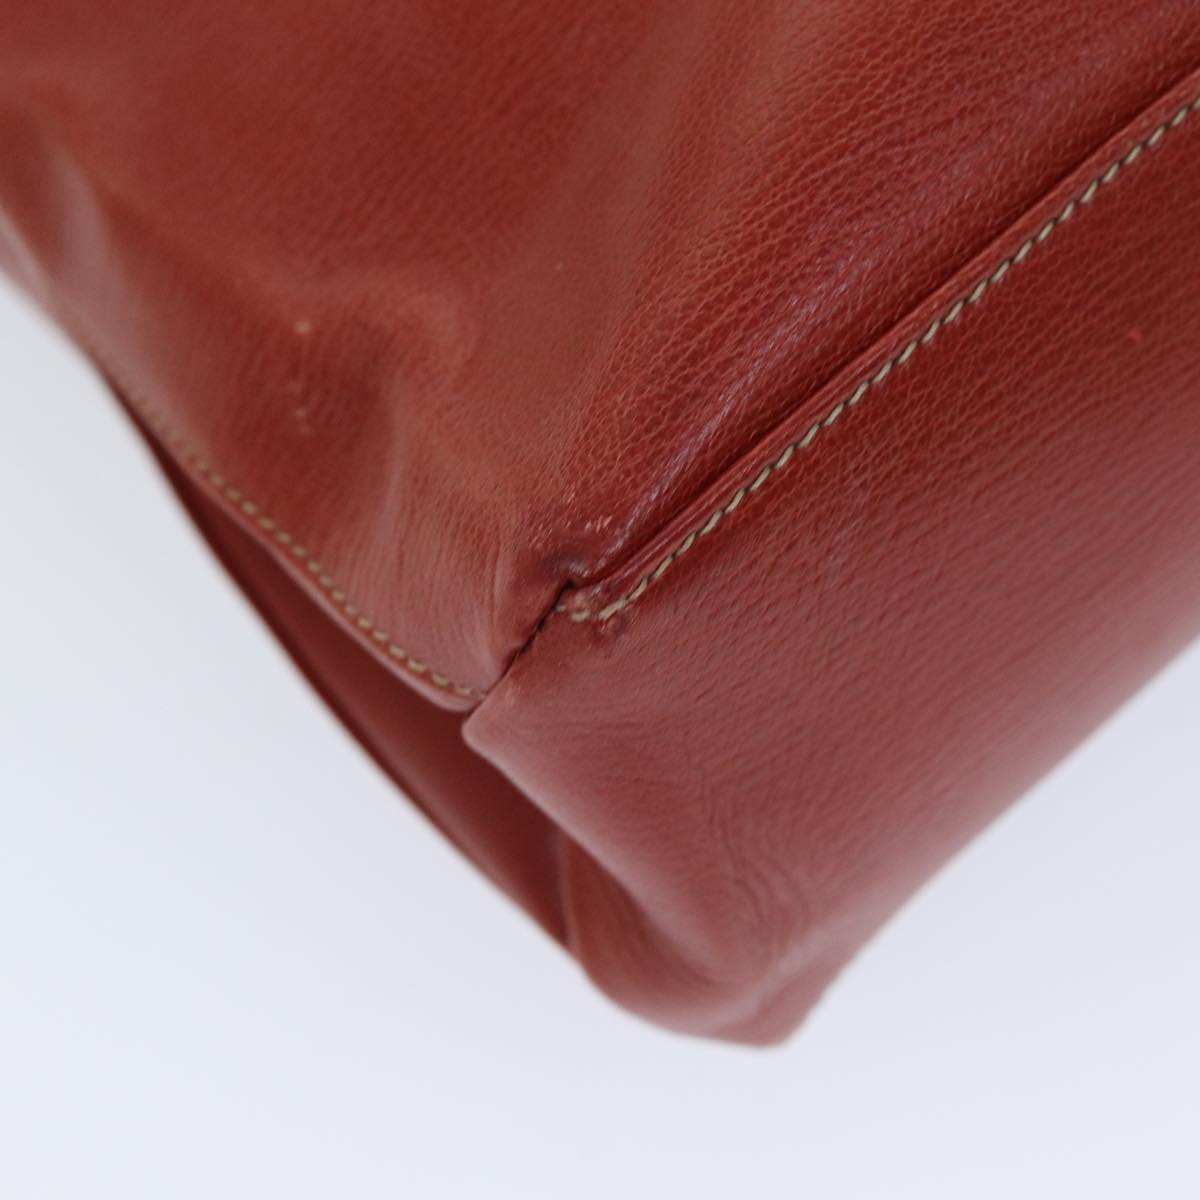 LOEWE Hand Bag Leather 2way Red Auth 73351